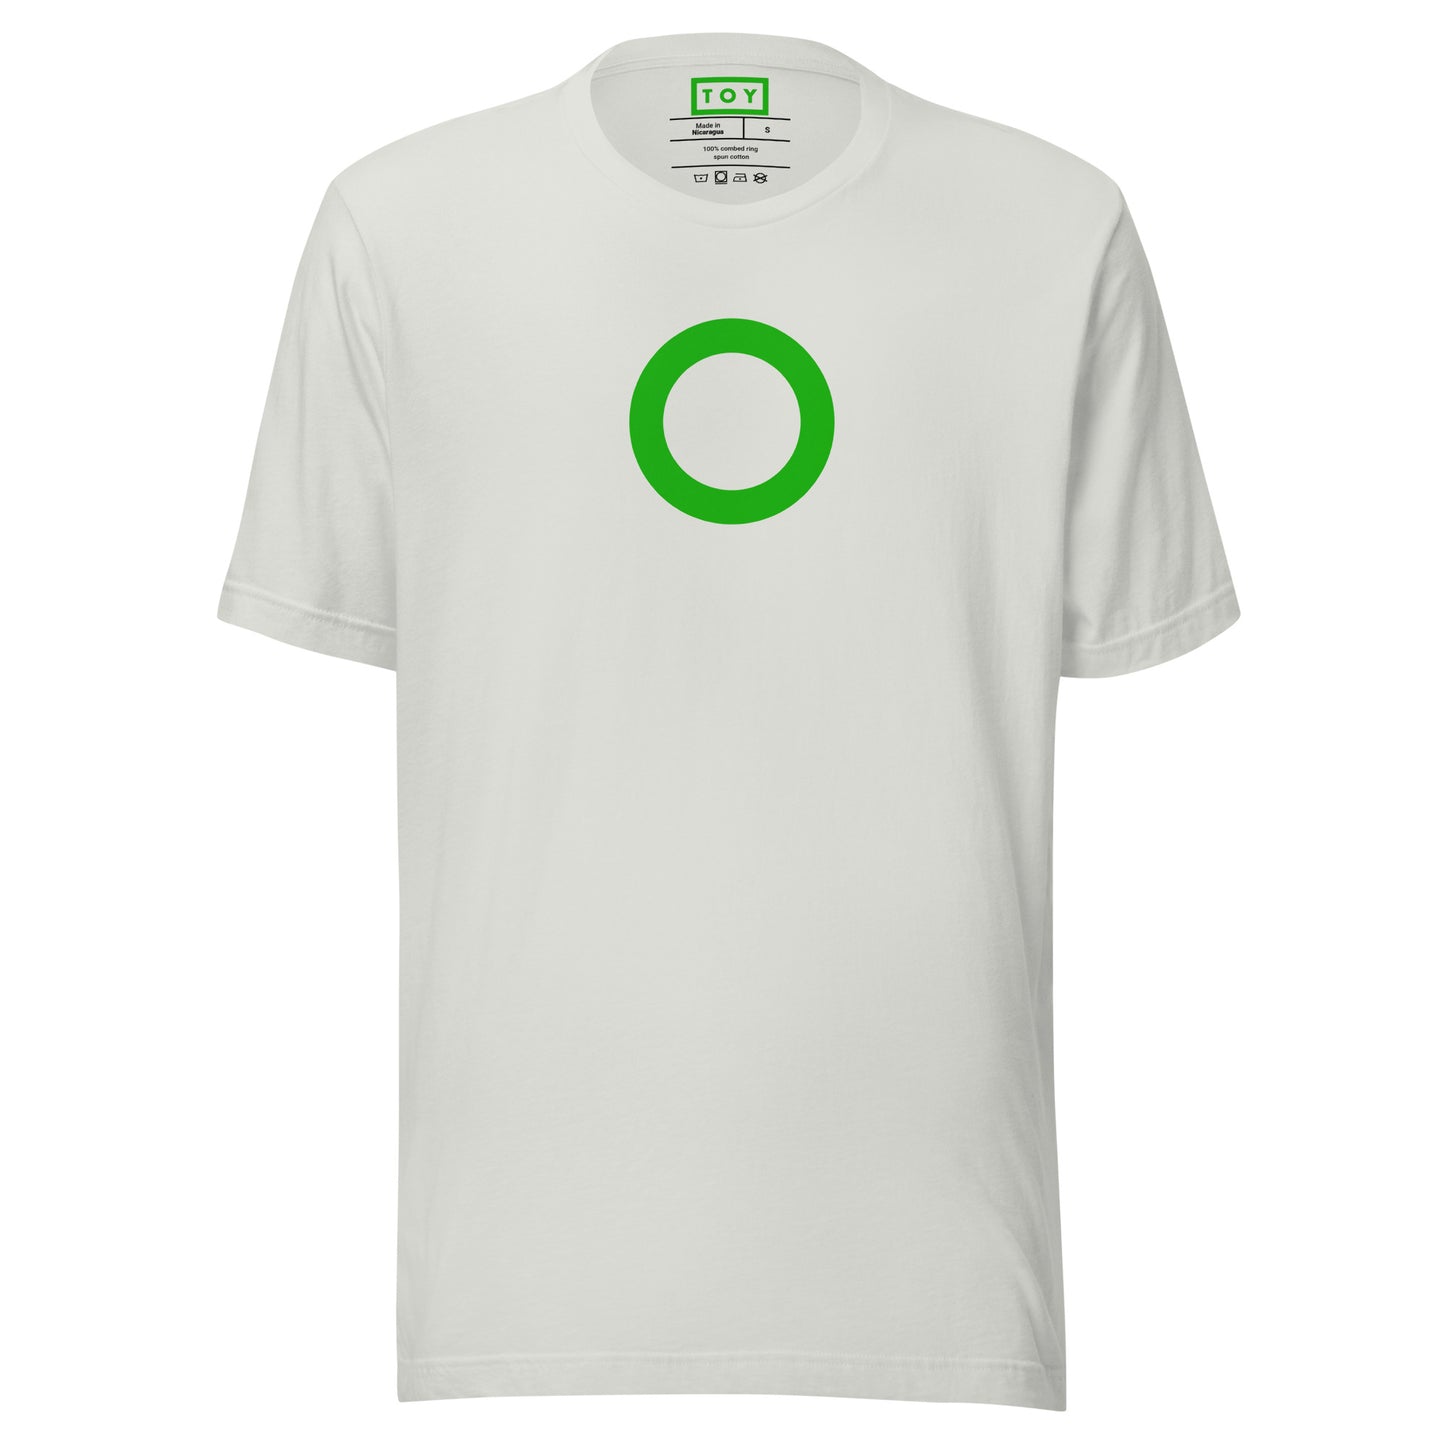 TOY [CIRCLE] Series (Gr) T-shirt